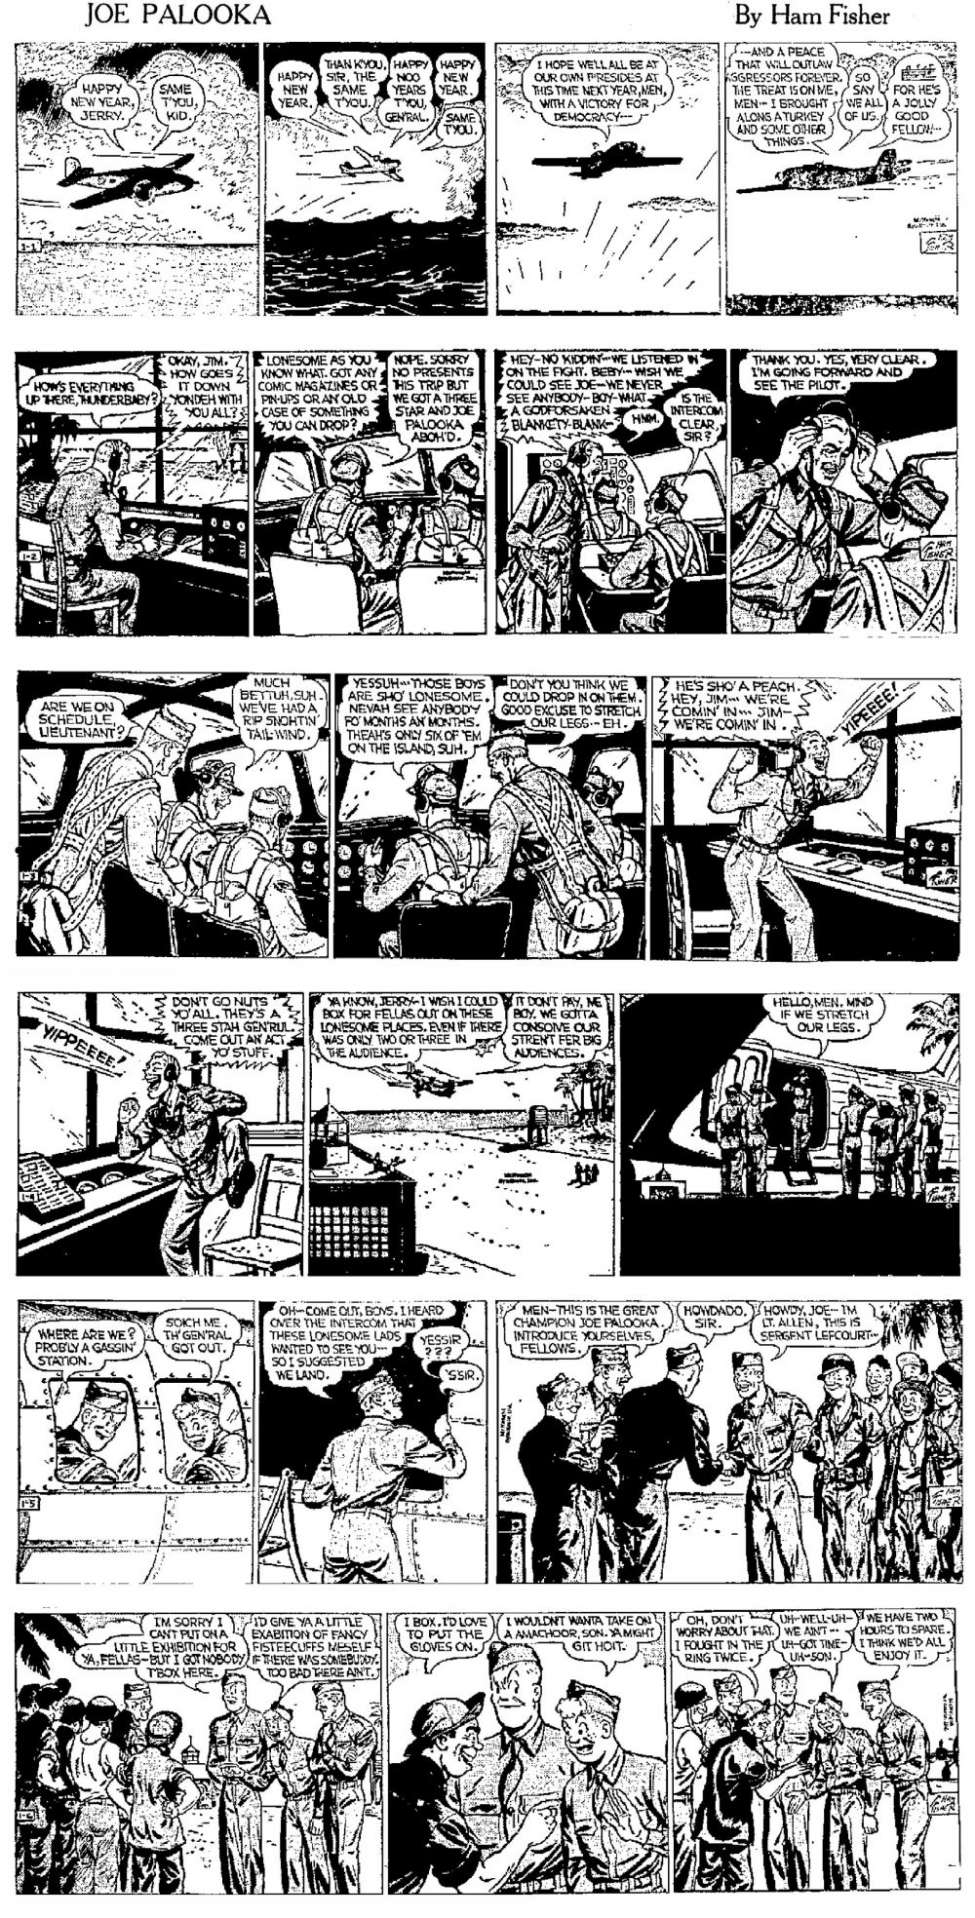 Comic Book Cover For Joe Palooka 1945